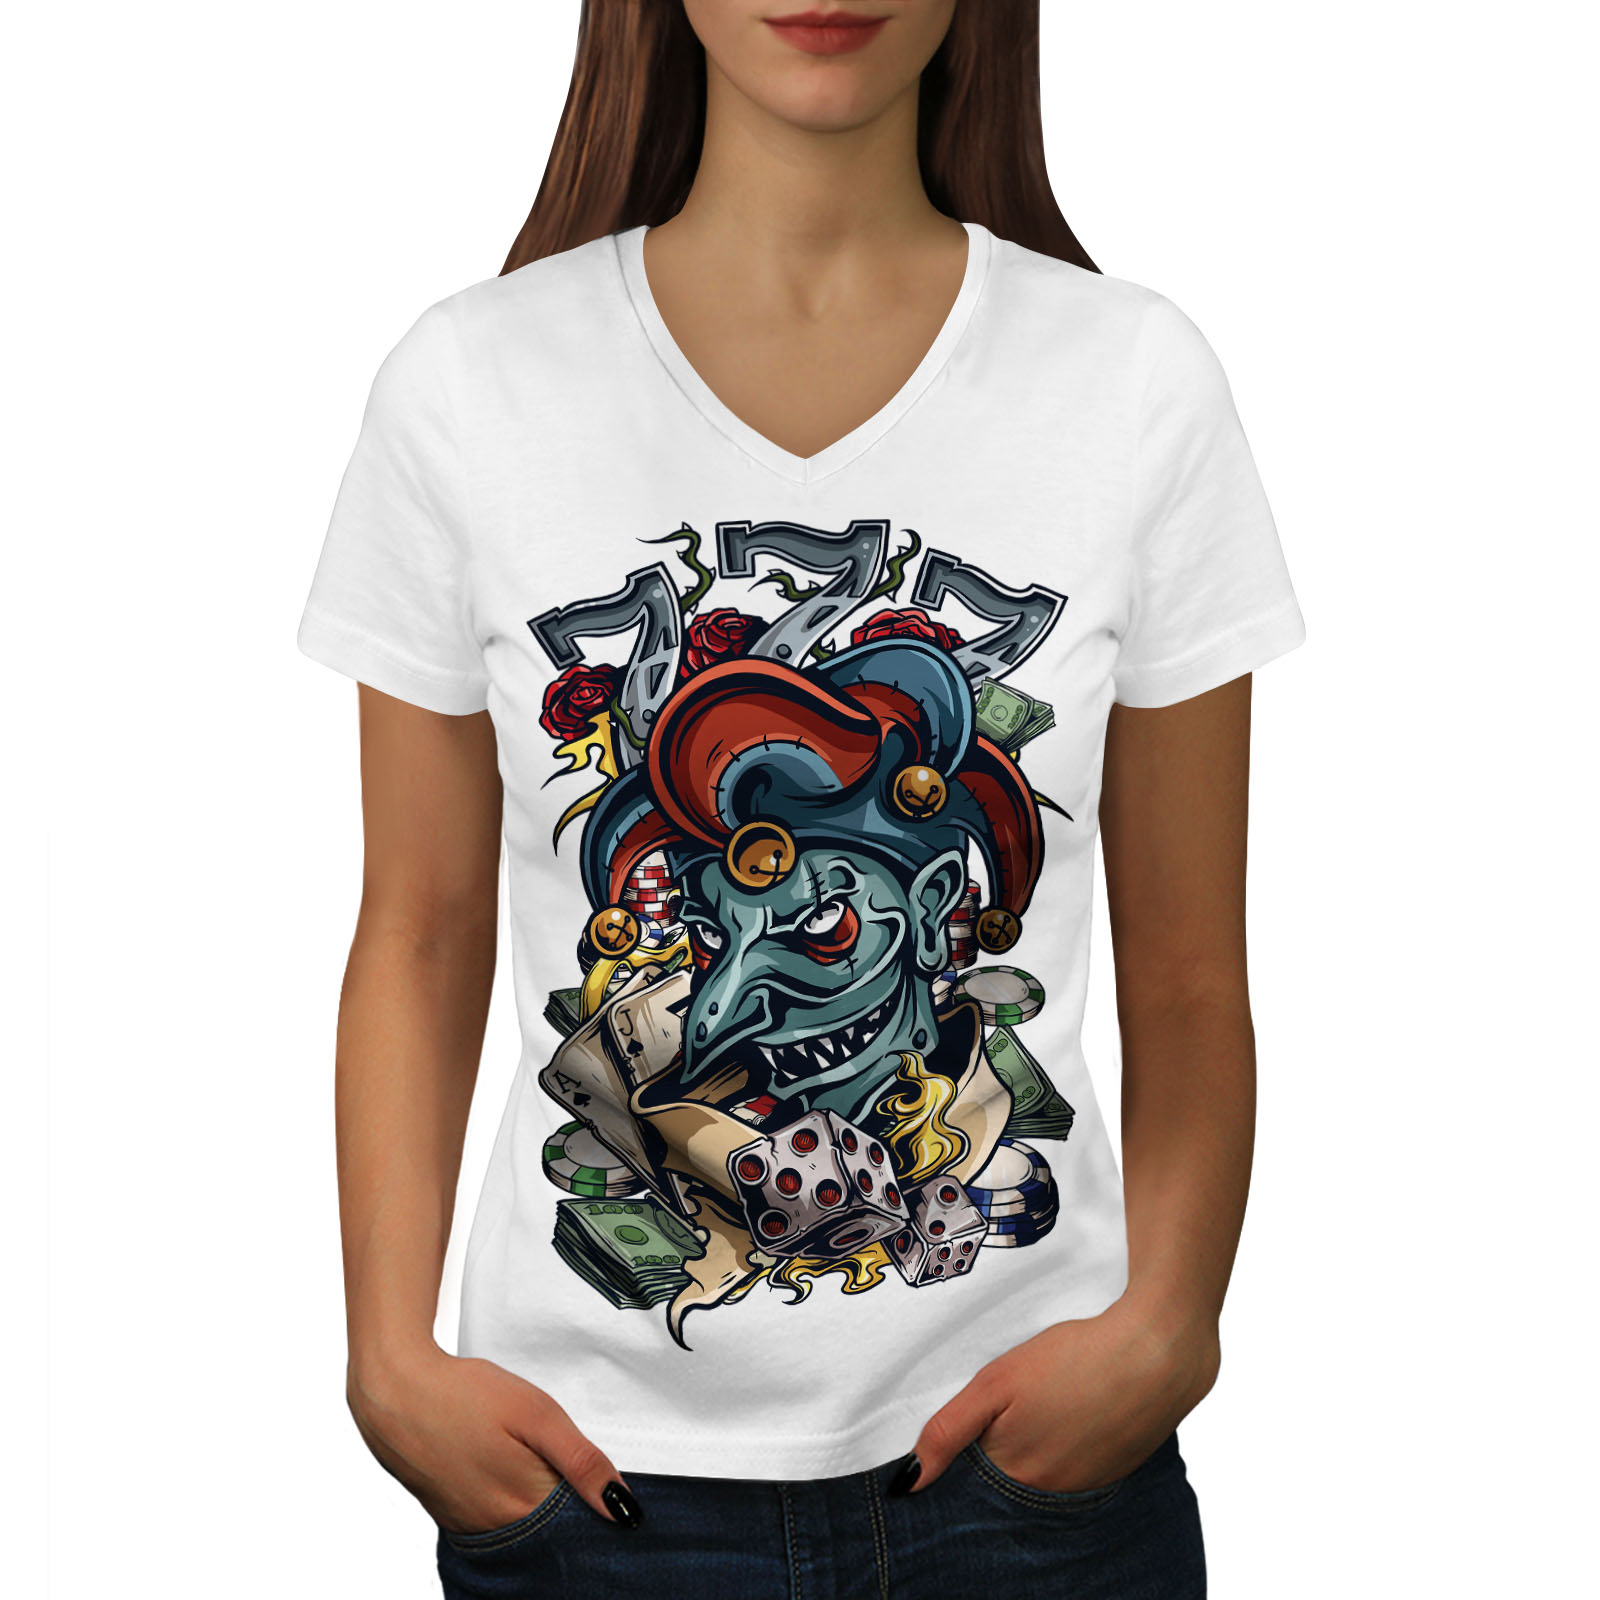 Wellcoda Clown Dice Poker Horror Womens V-Neck T-shirt Graphic Design Tee 